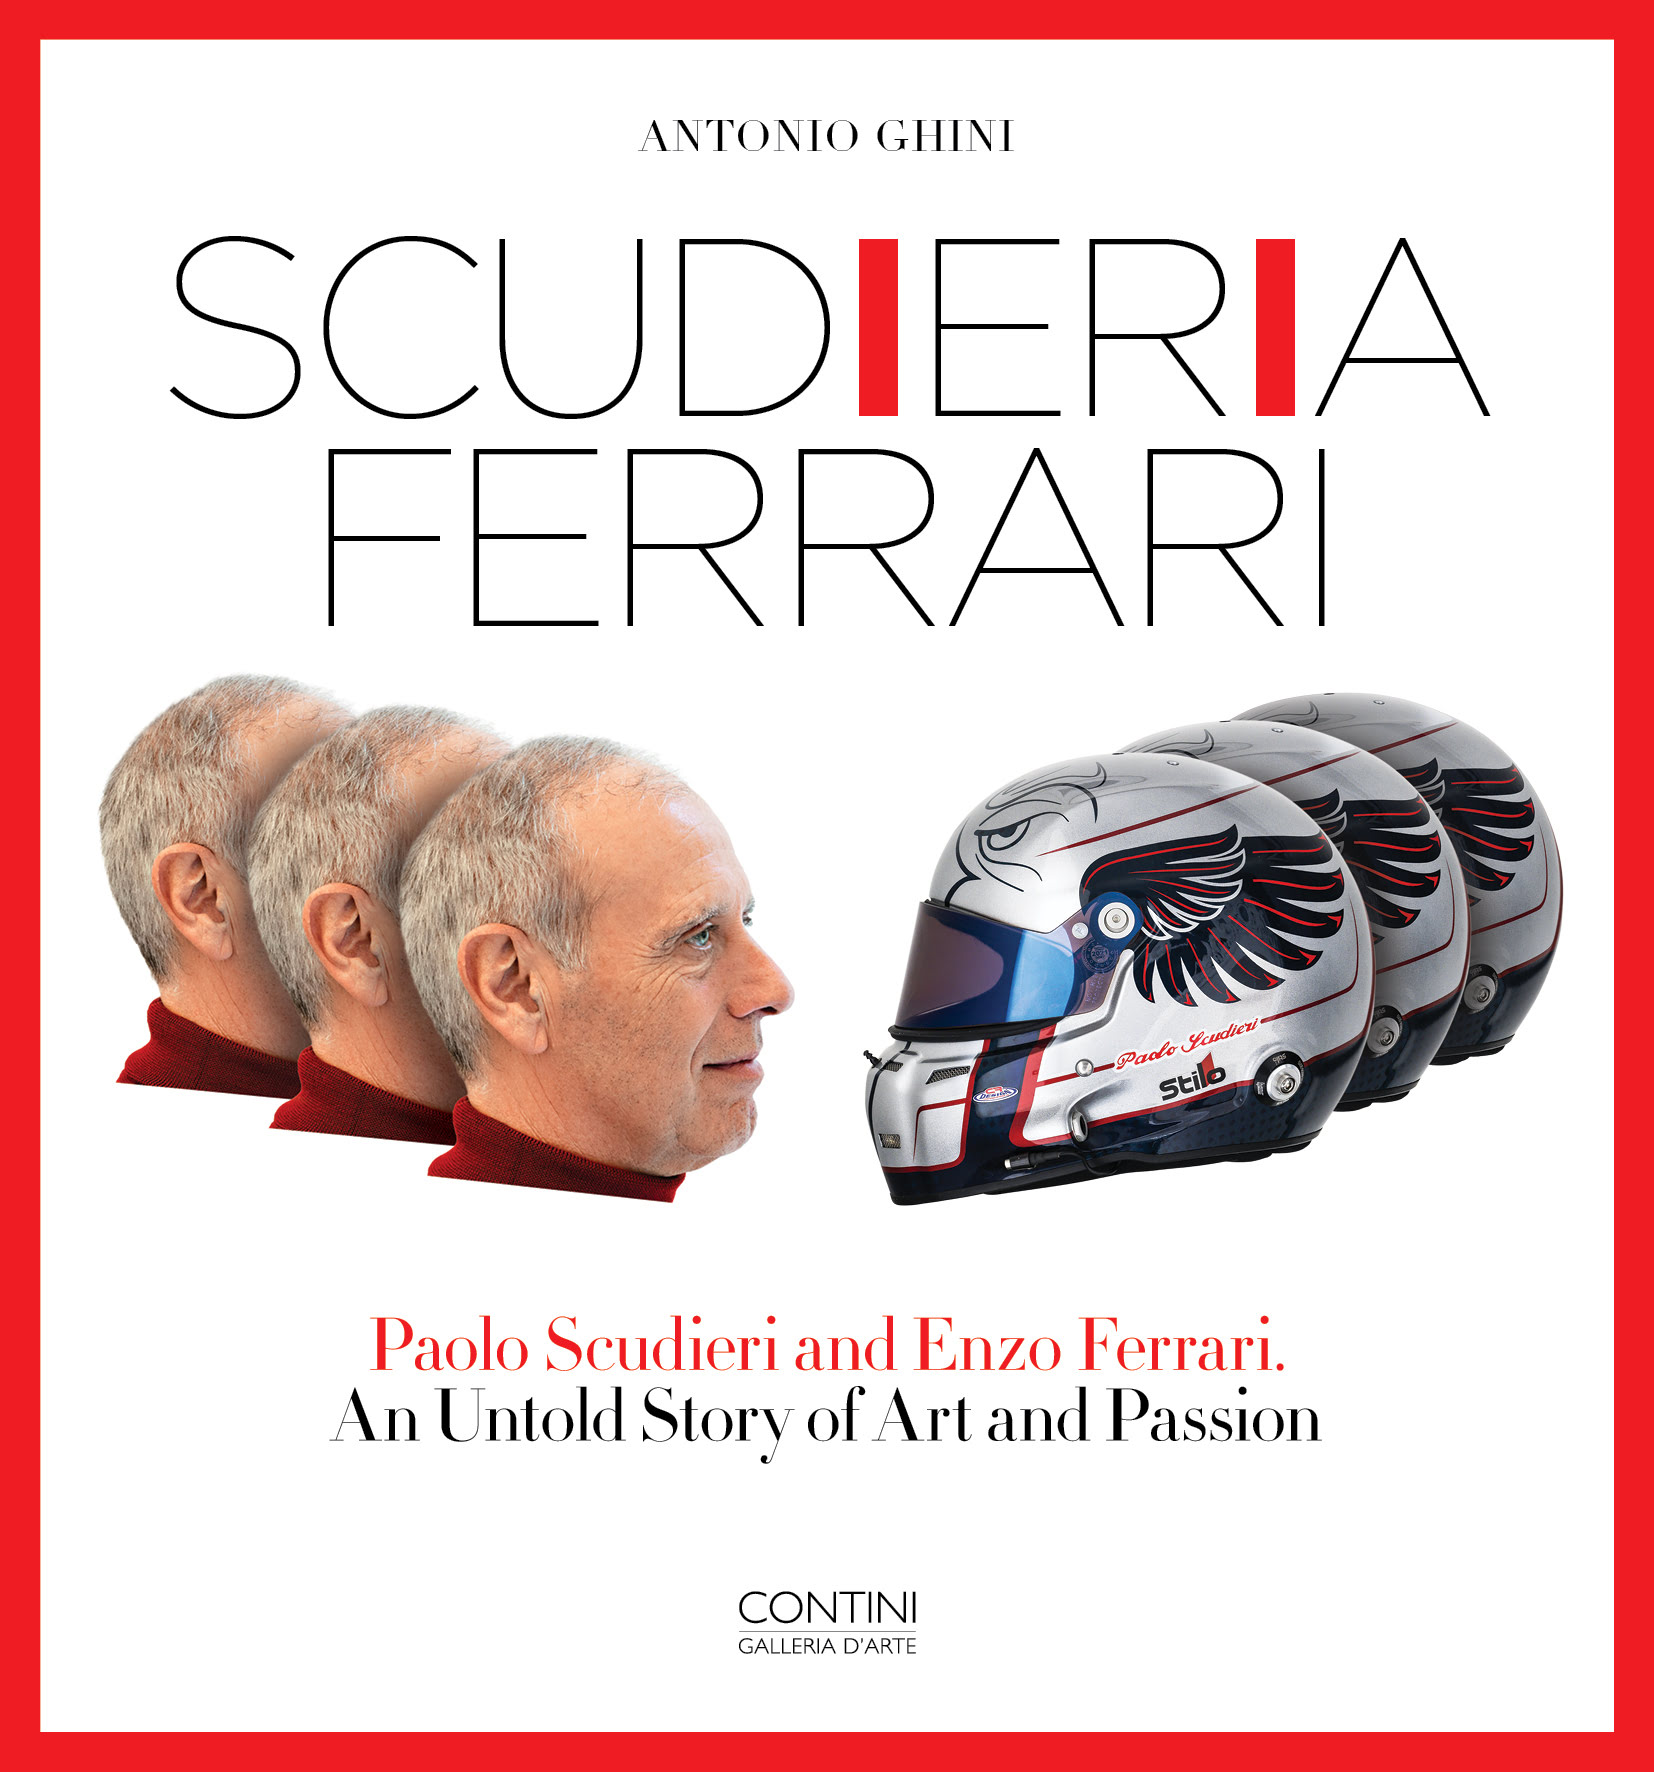 25 works of art for a new story of Enzo Ferrari